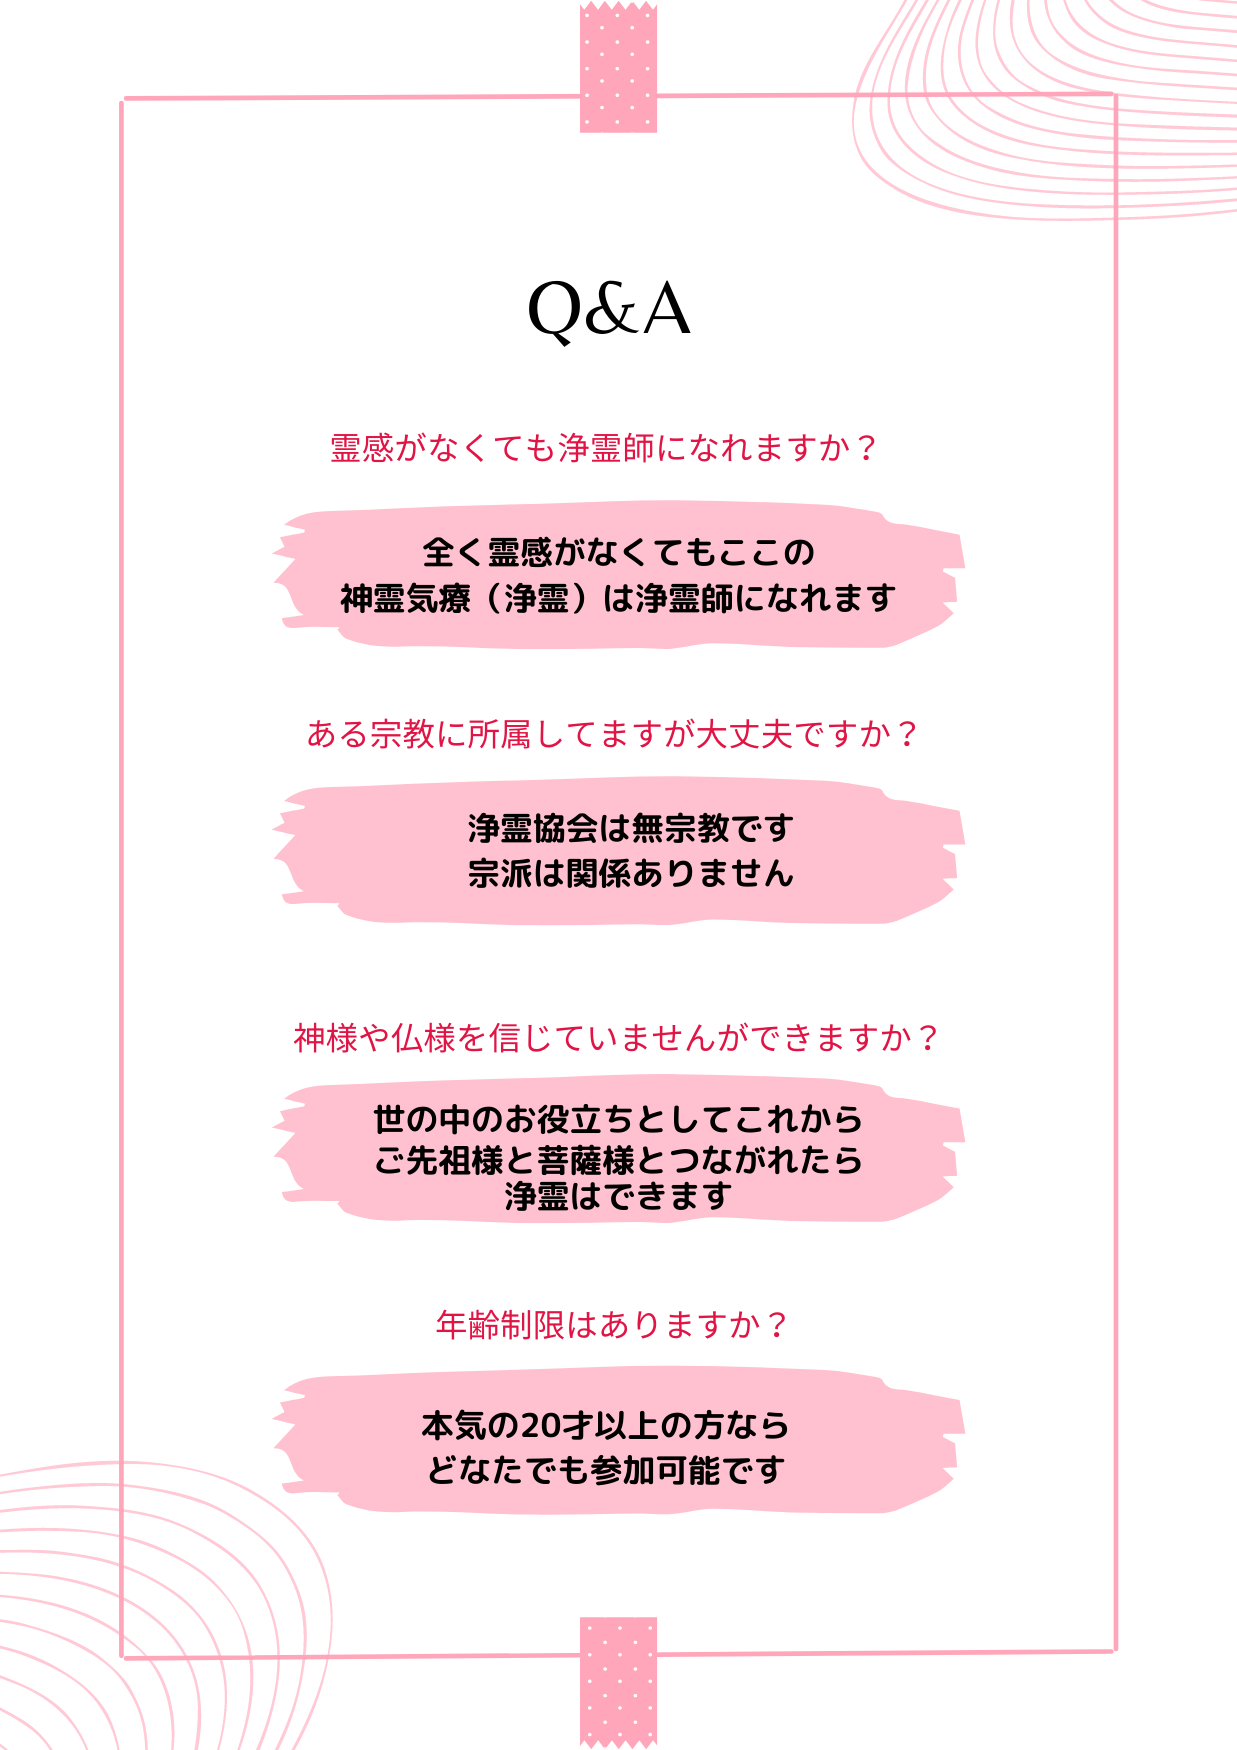 Q&A Pink Valentine Day Instagram Stories (210 × 297 mm).png